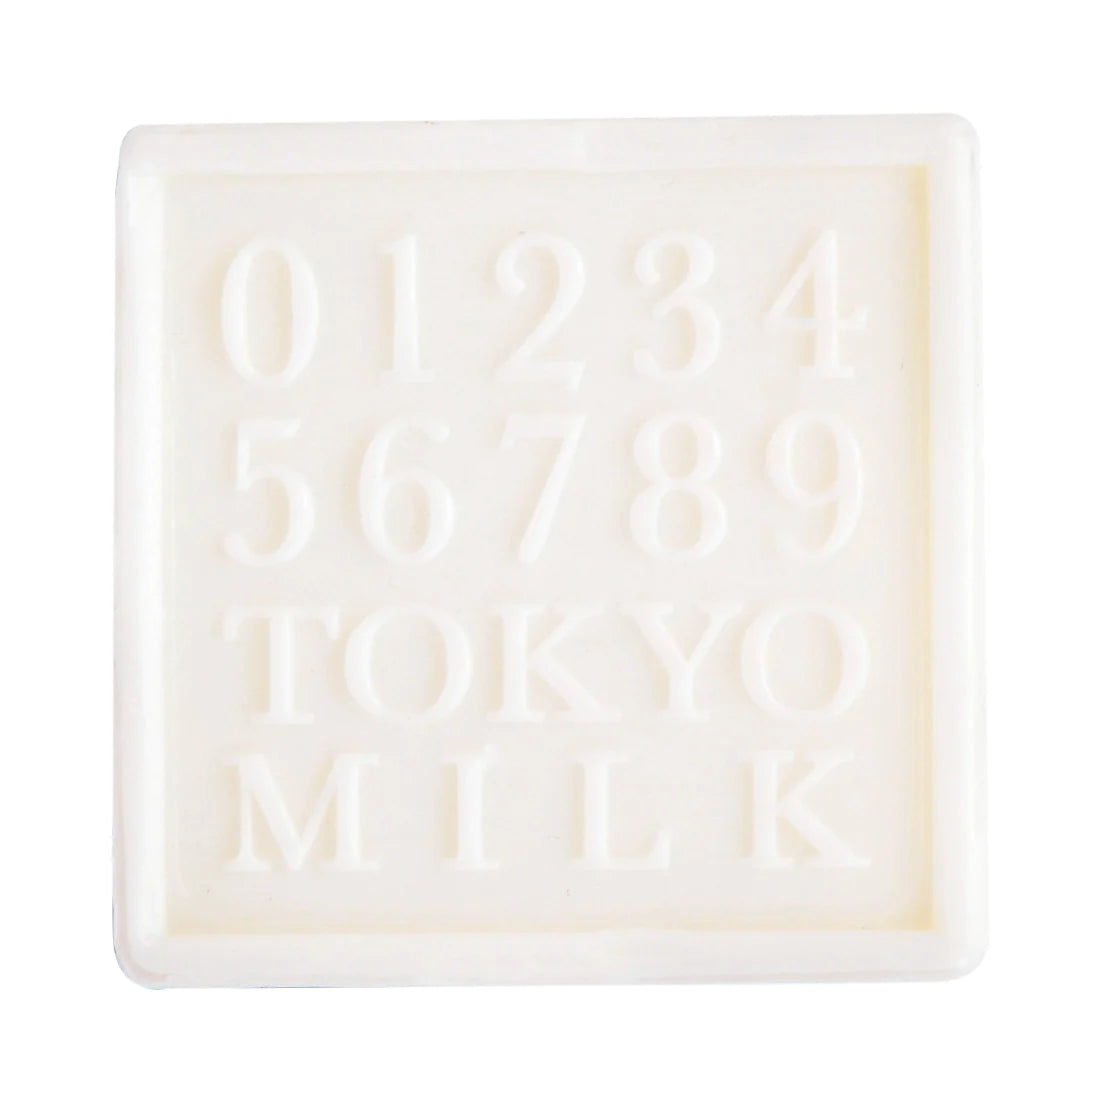 Tokyomilk "Party Like a Rockstar" Finest Perfumed Soap – Green Tea Fragrance - 4oz